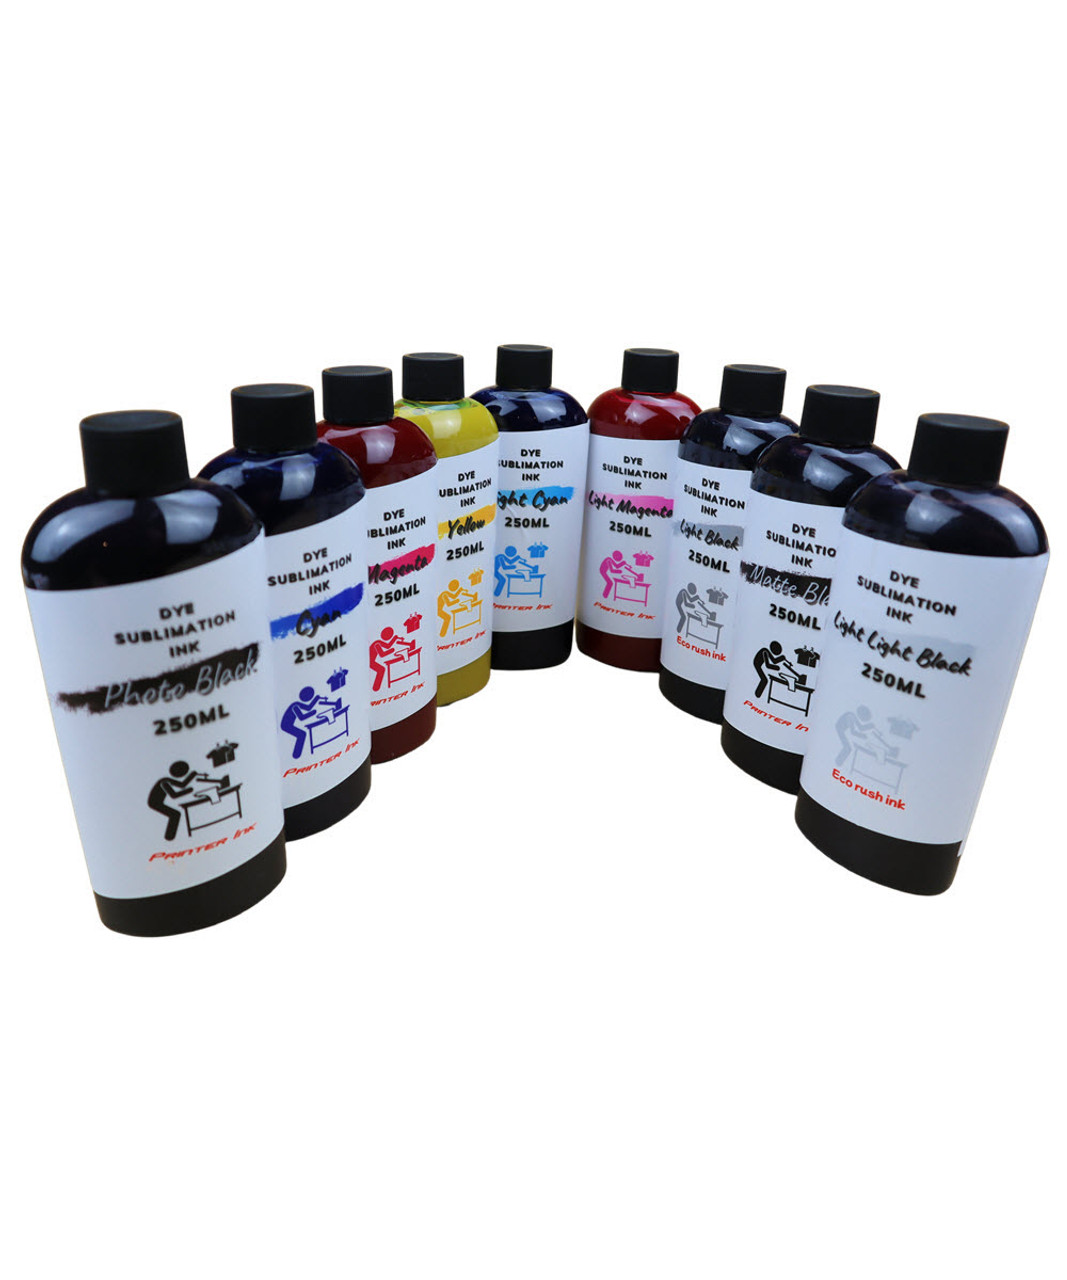 Pick 3 Colors Dye Sublimation Ink 250ml Bottles for Epson Stylus Pro 4880 Printers